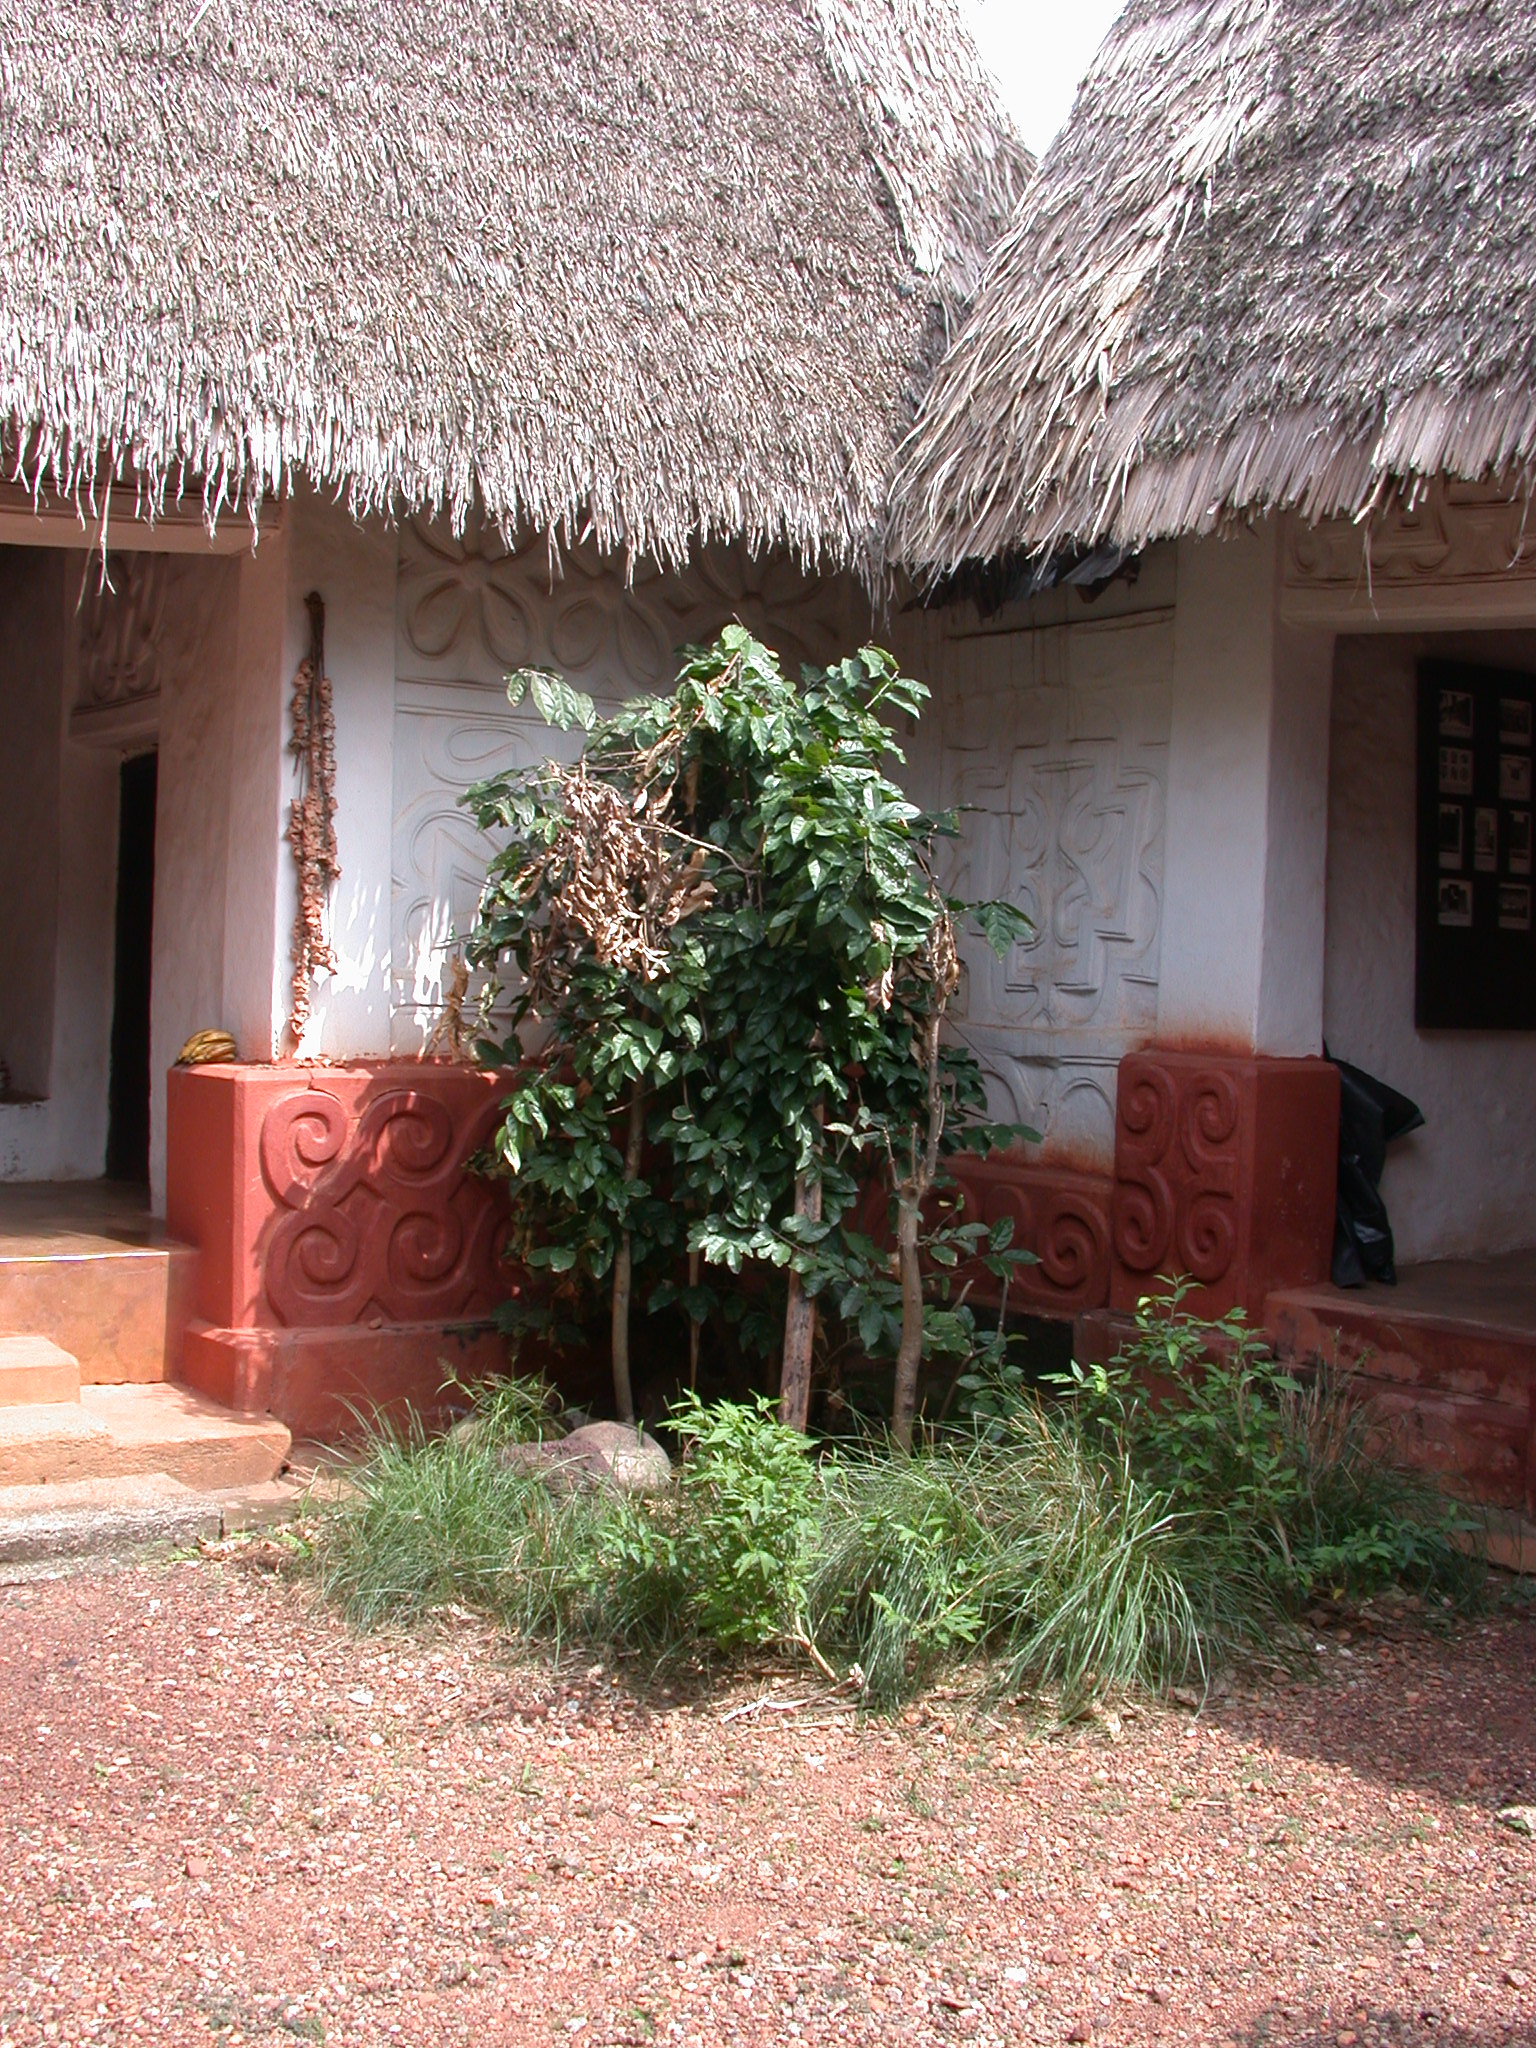 Tree Grove in Courtyard, Asante Traditional Shrine at Ejisu-Besease, Ghana